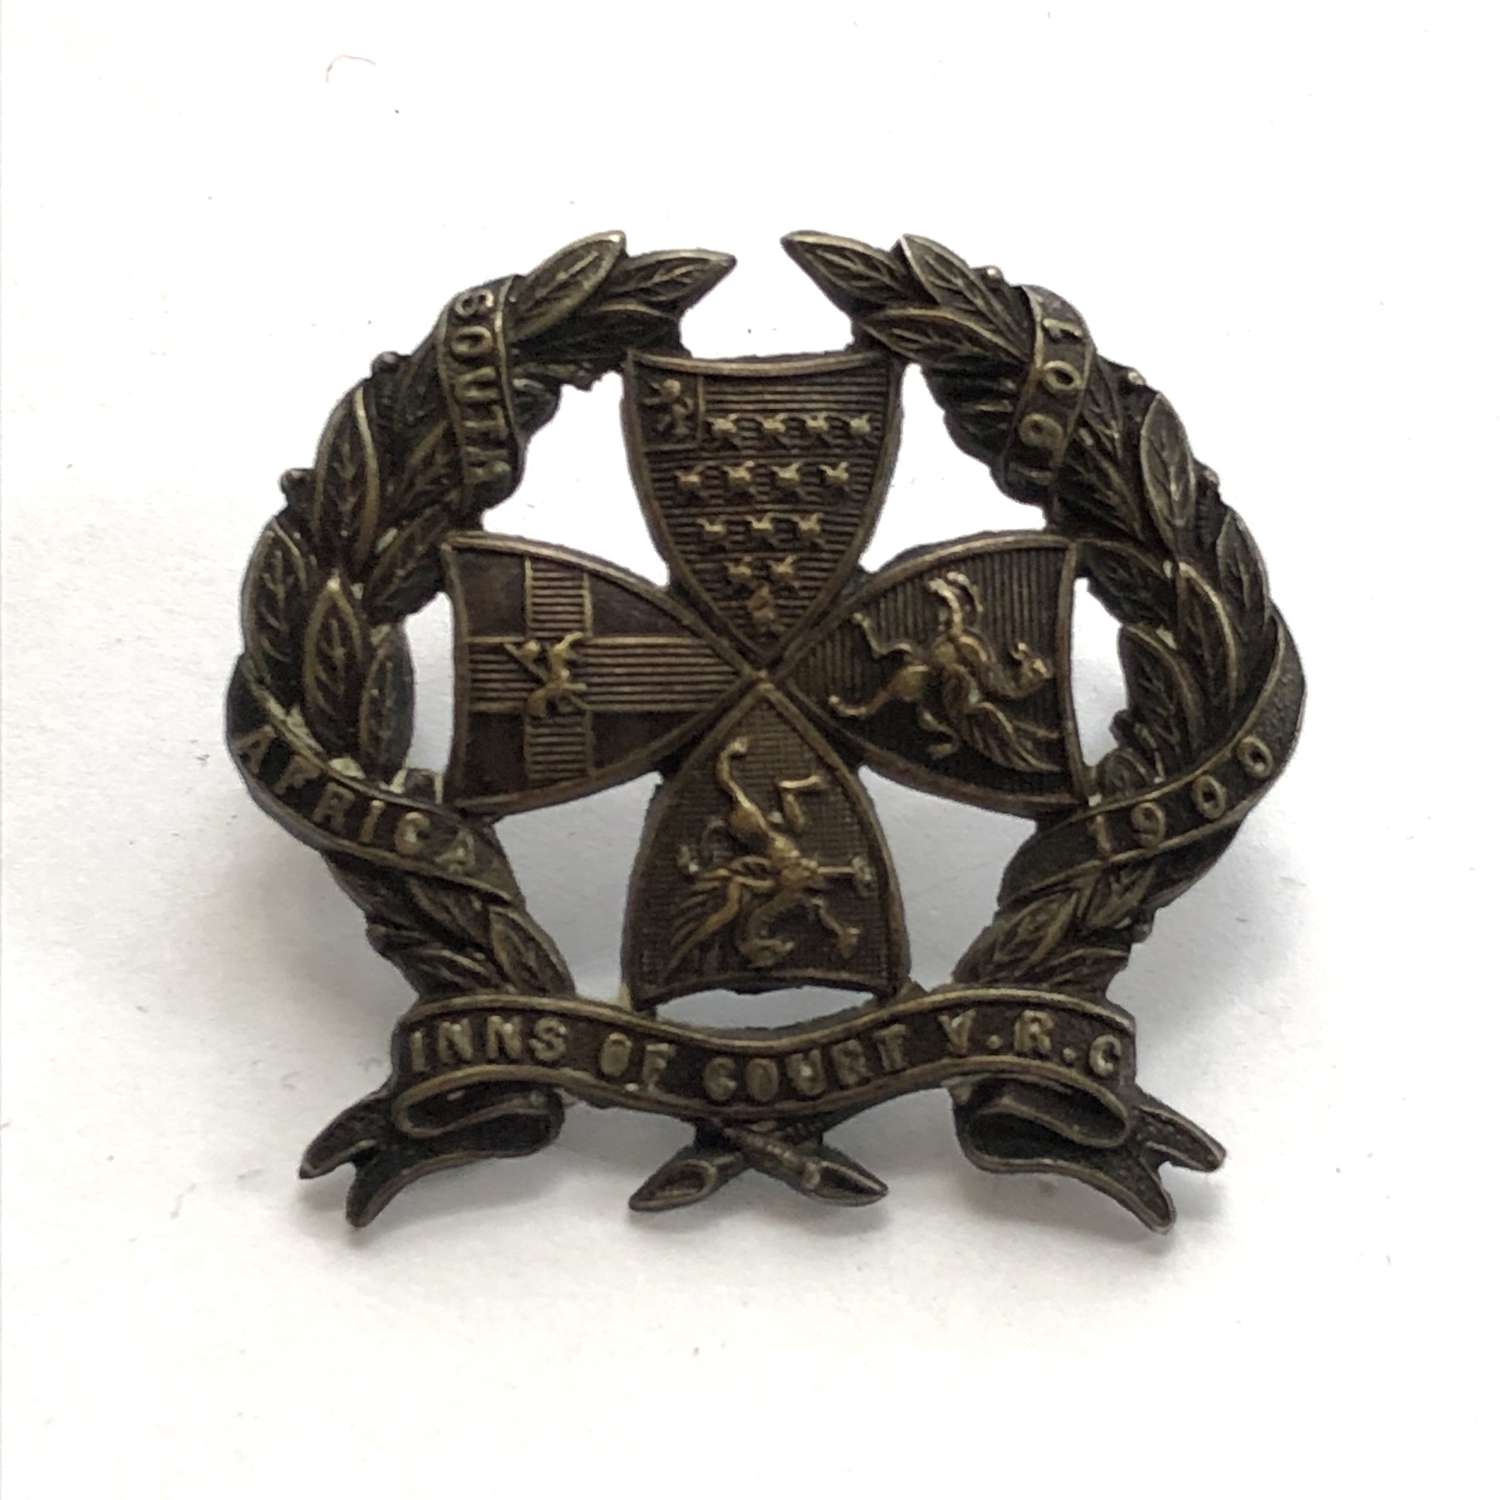 Inns of Court Volunteer Rifle Corps Officer's cap badge c1905-08